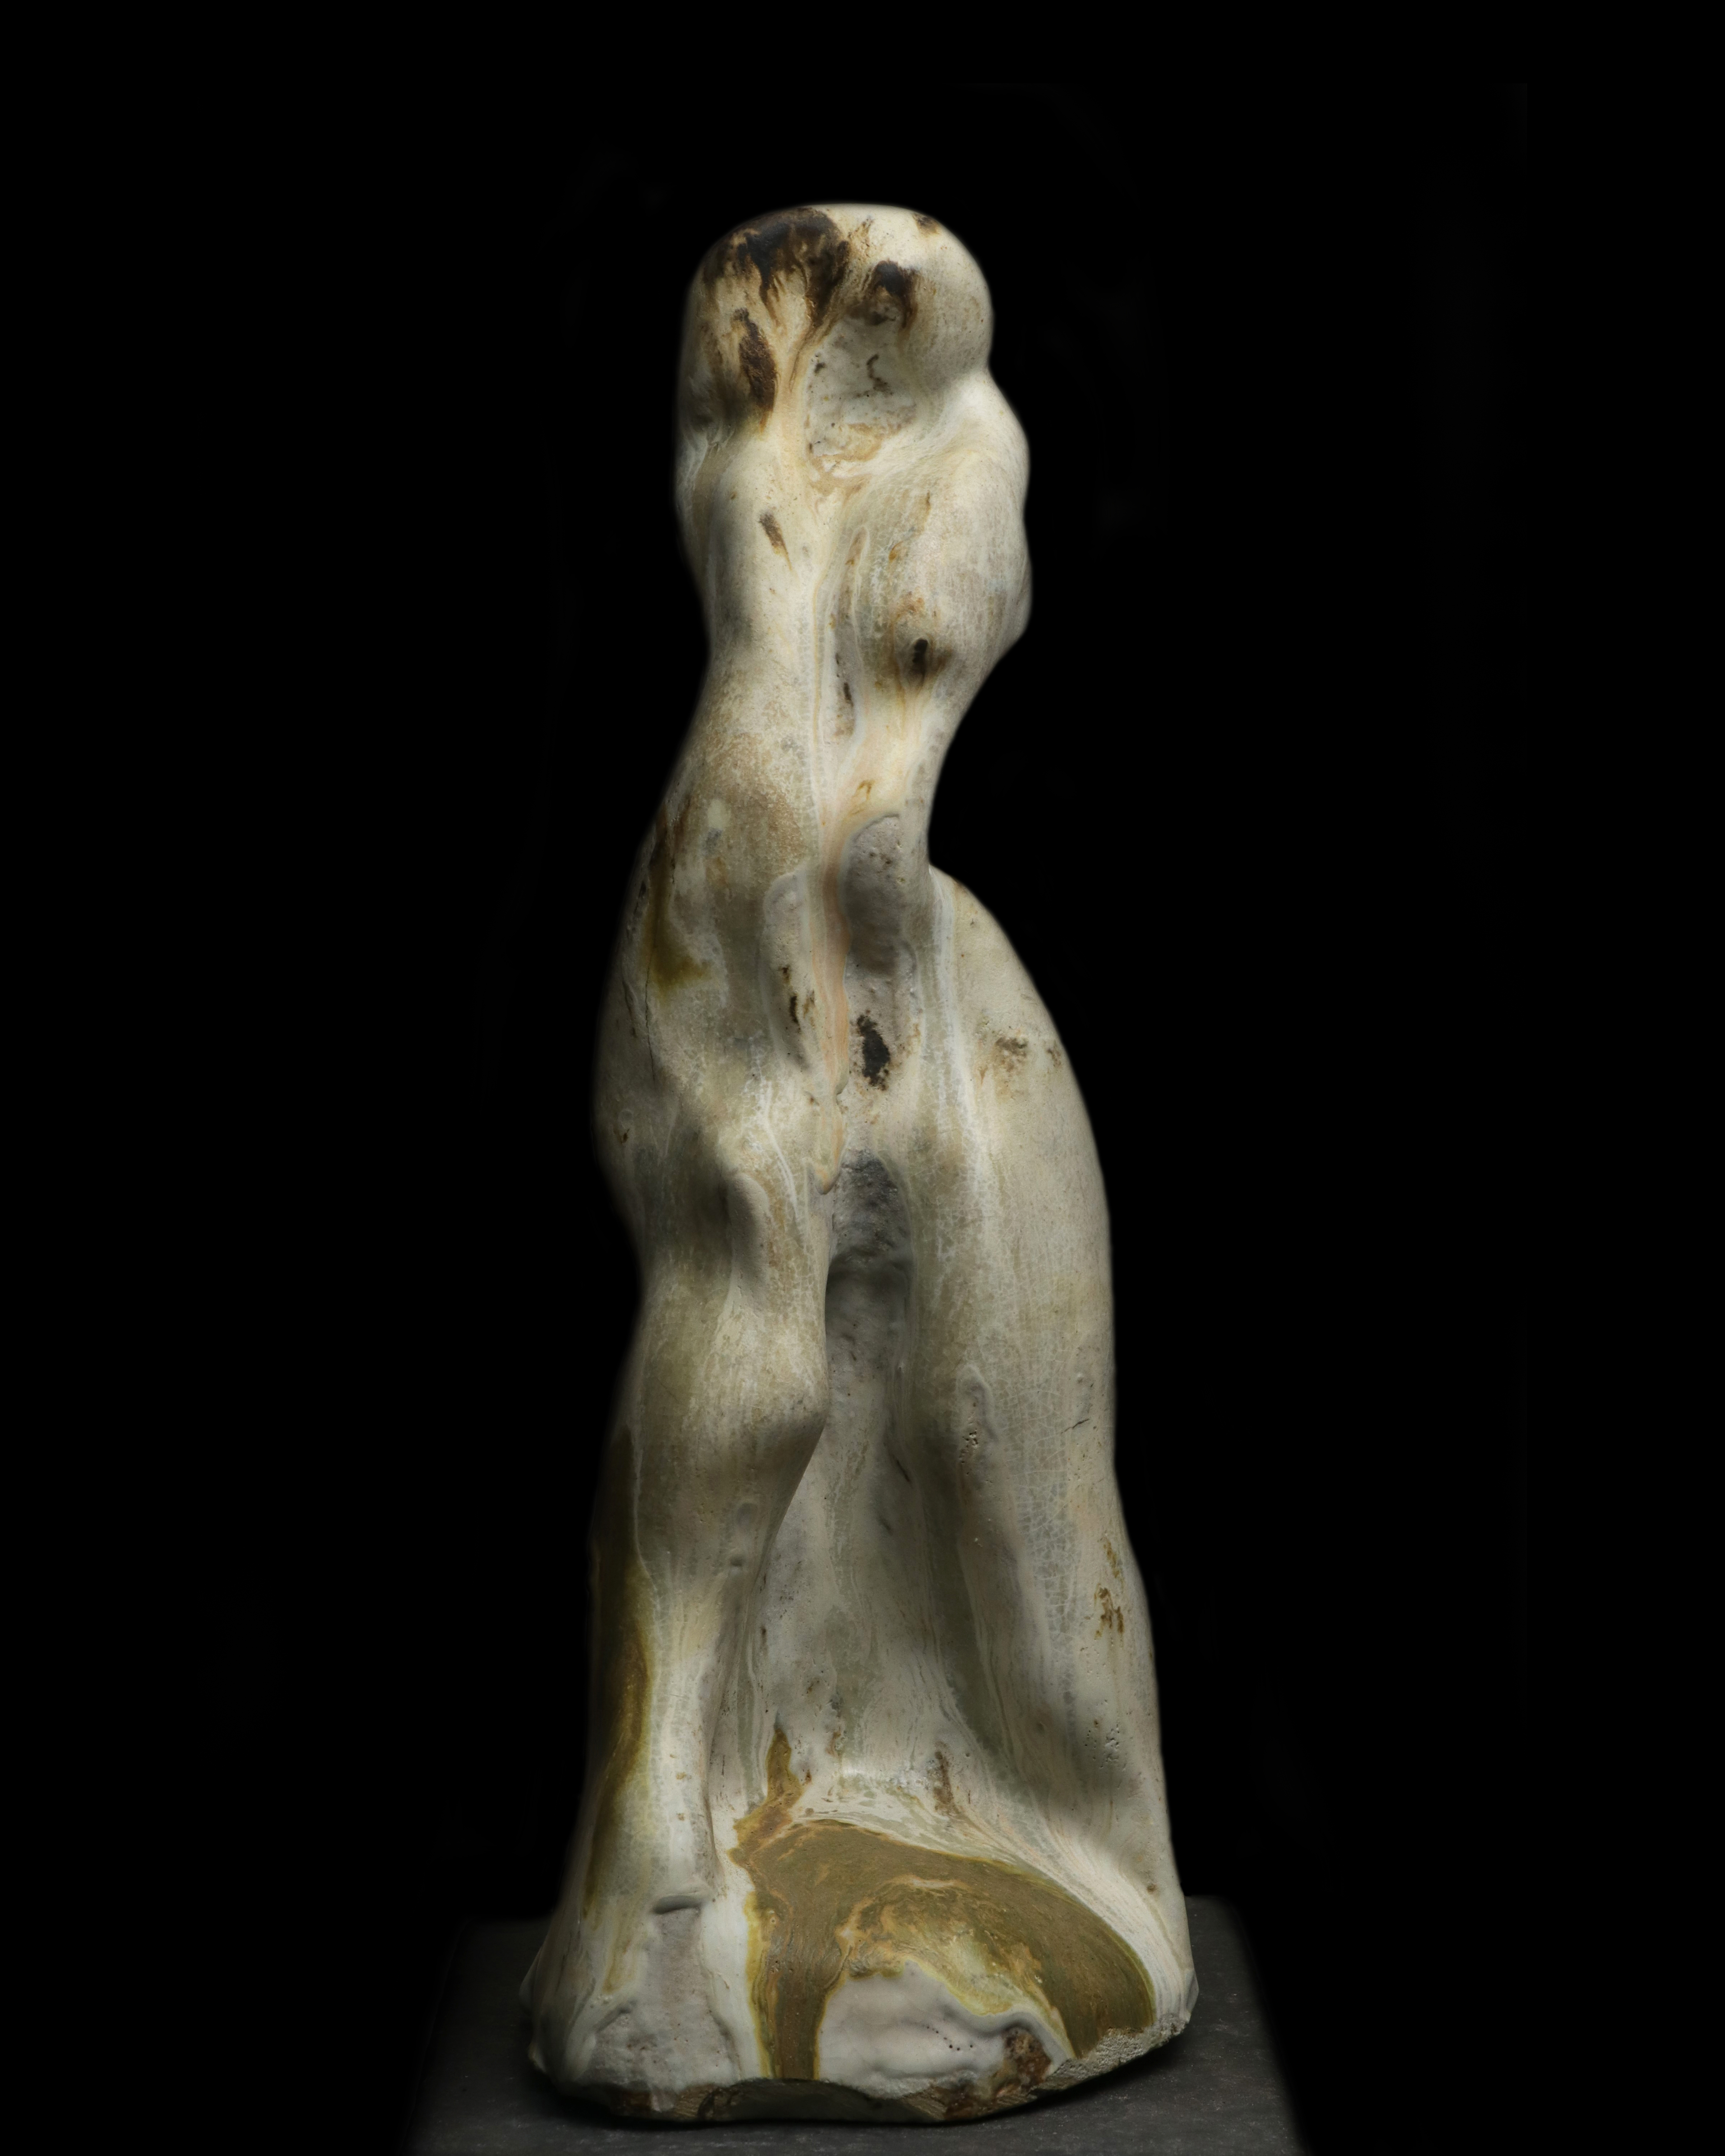 Nicolas-Pierre Réveillard, sculpture "Baigneuse" / "Bather girl"